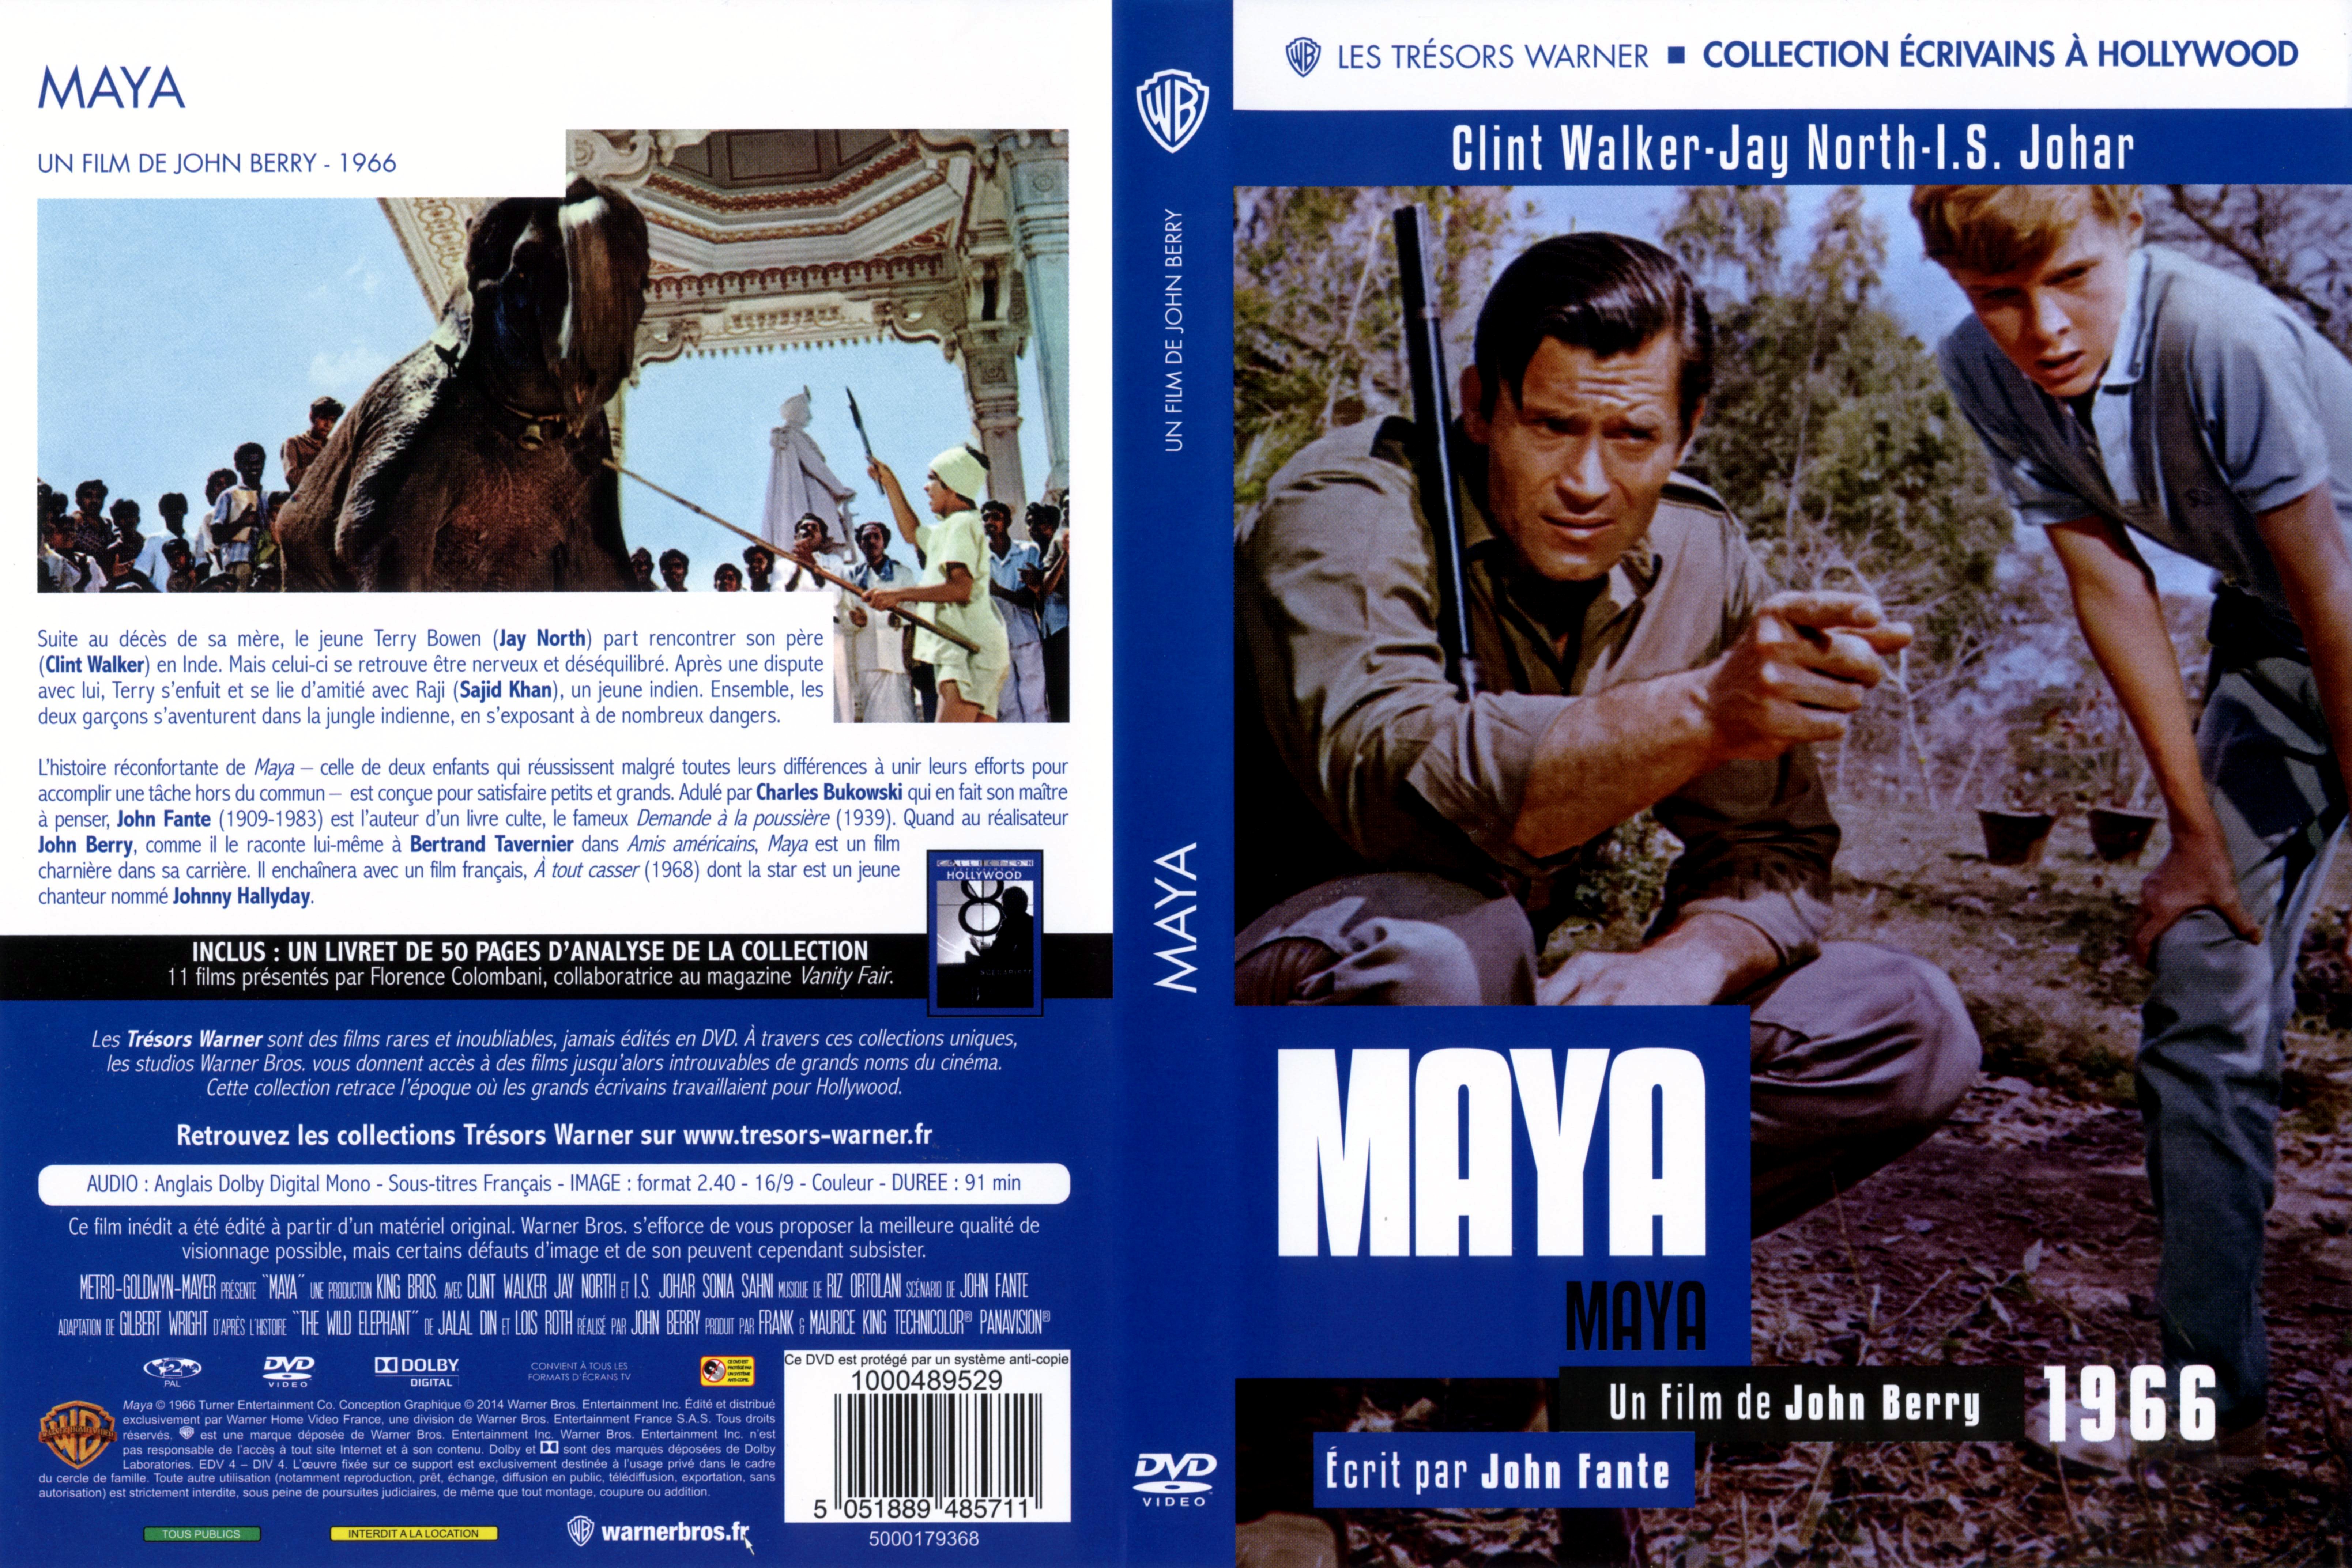 Jaquette DVD Maya